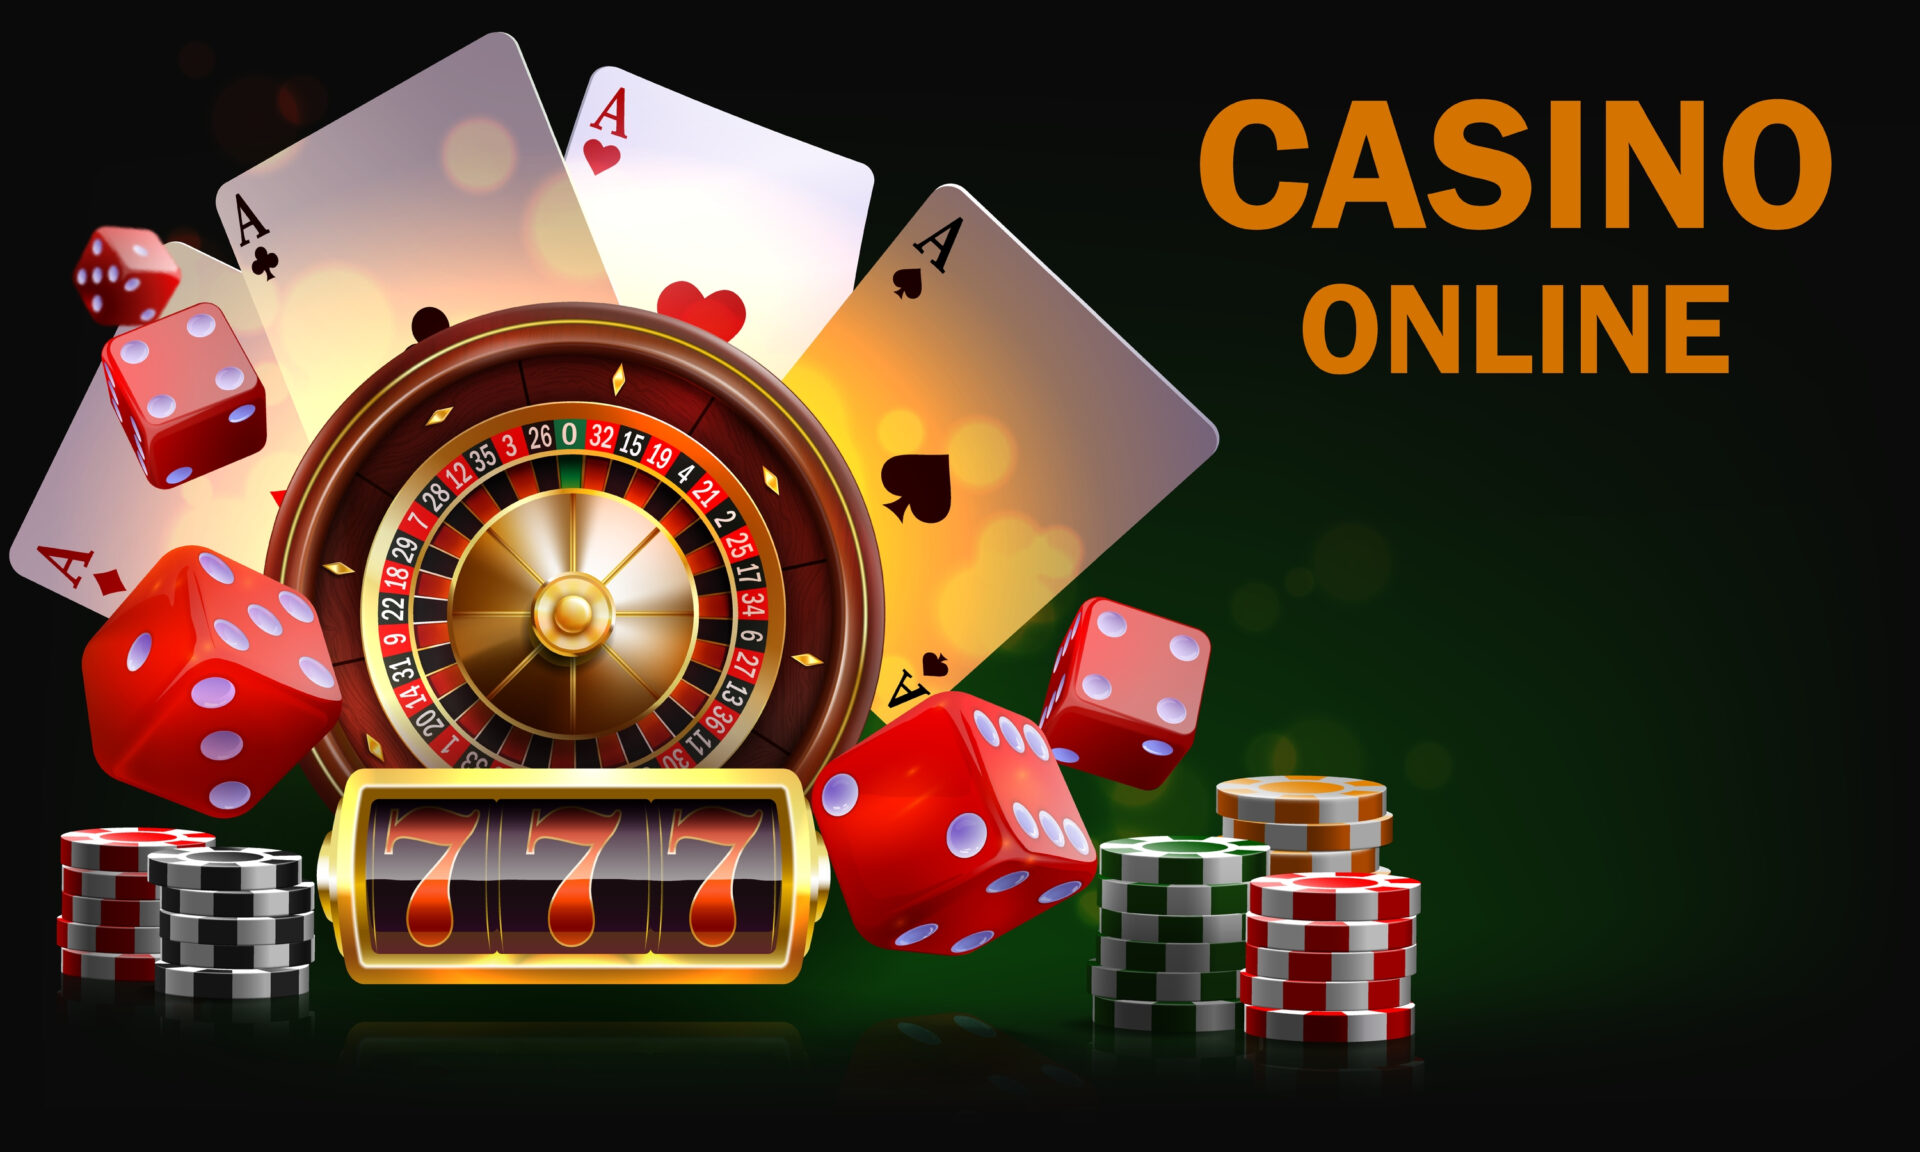 Bonus bucks- How to maximize online casino promotions?